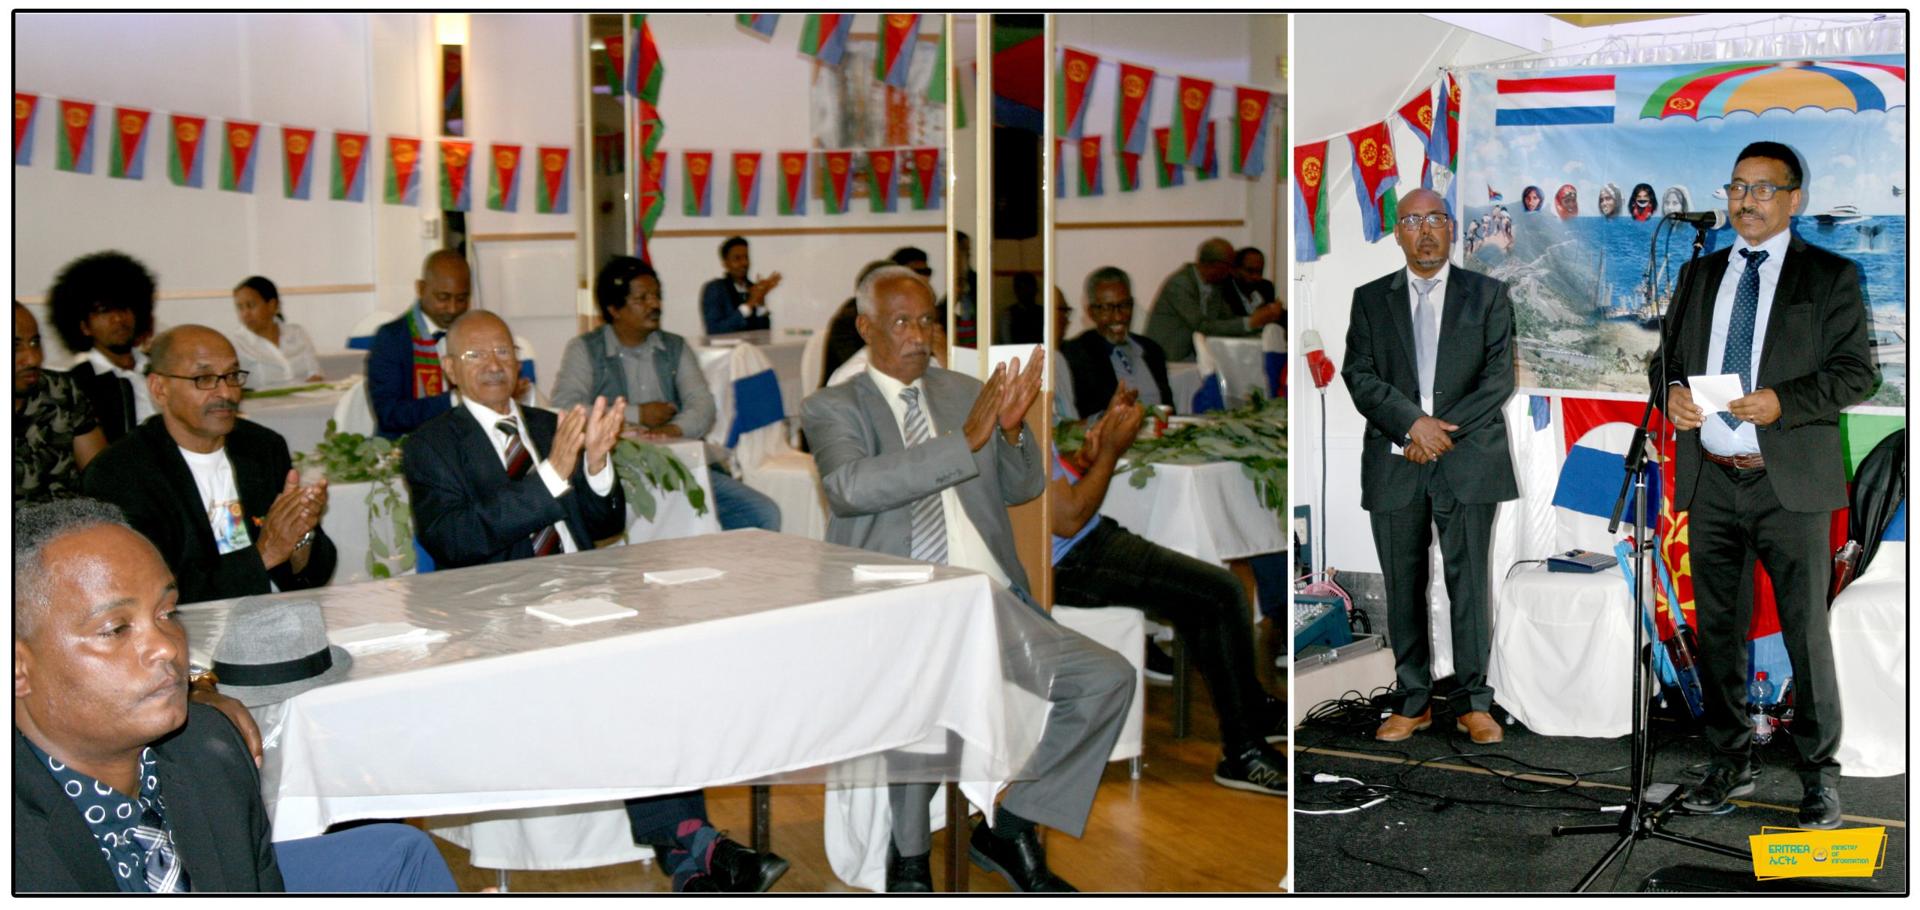 Eritrean community festival in Netherlands